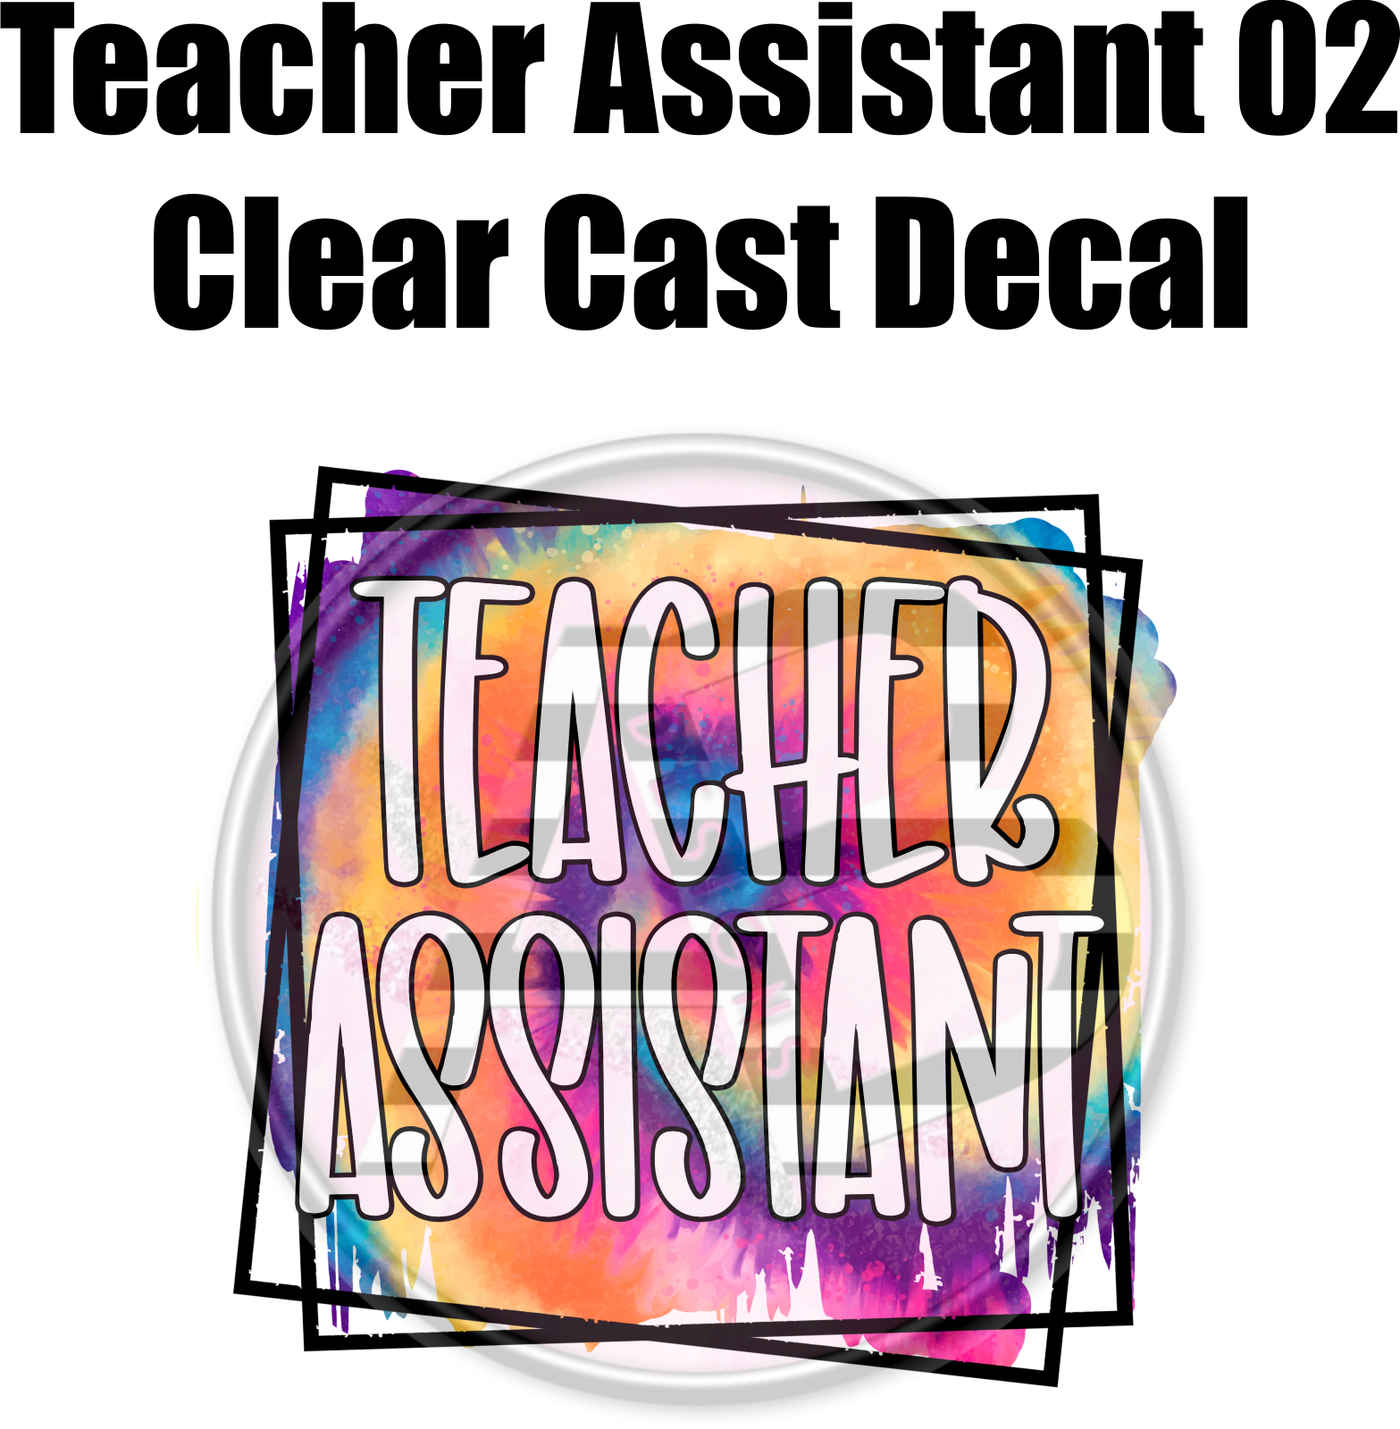 Teacher Assistant 02 - Clear Cast Decal - 49